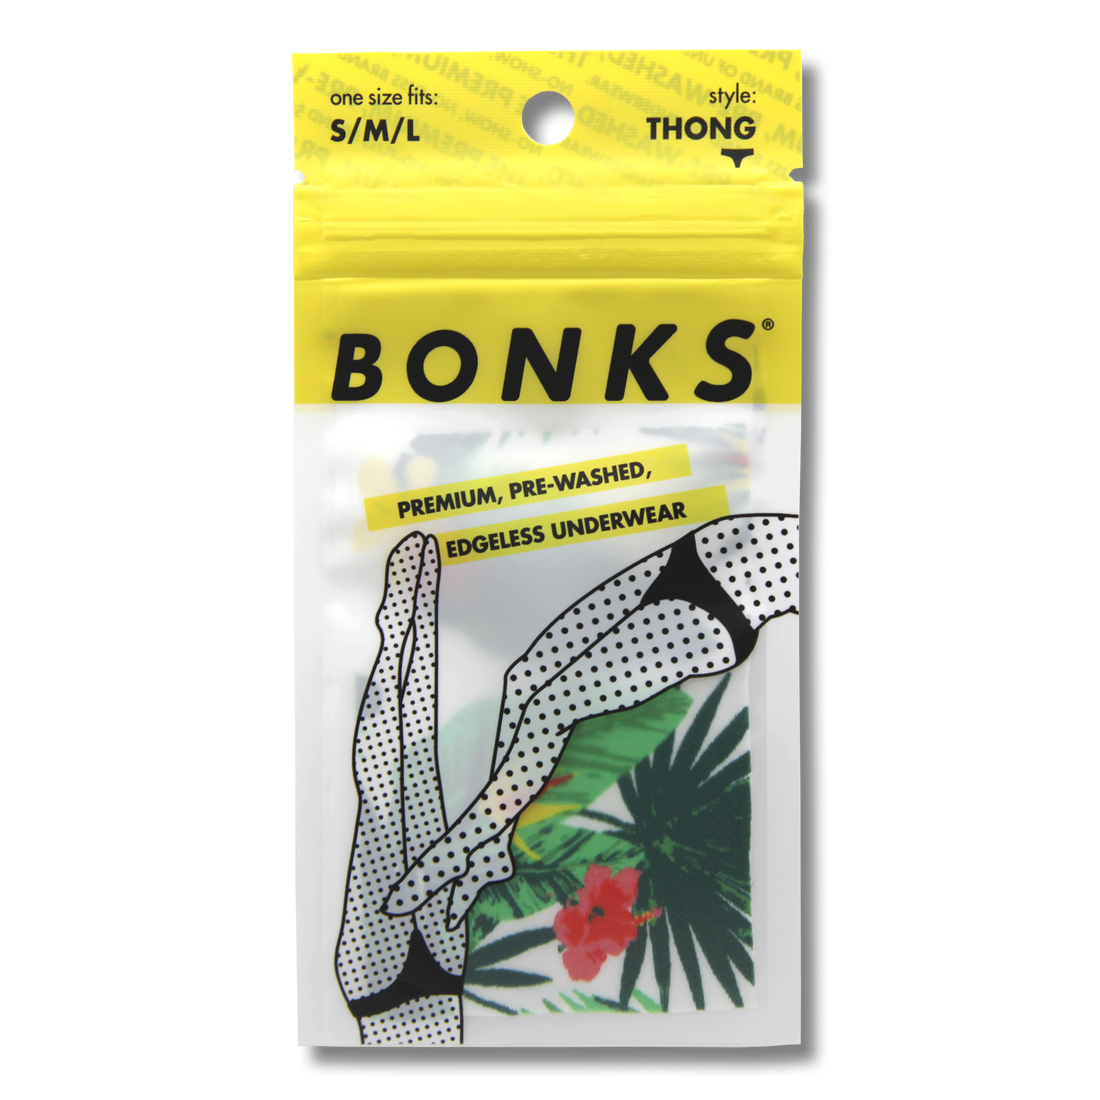 Classic Thong (Tropic Like It's Hot) by BONKS